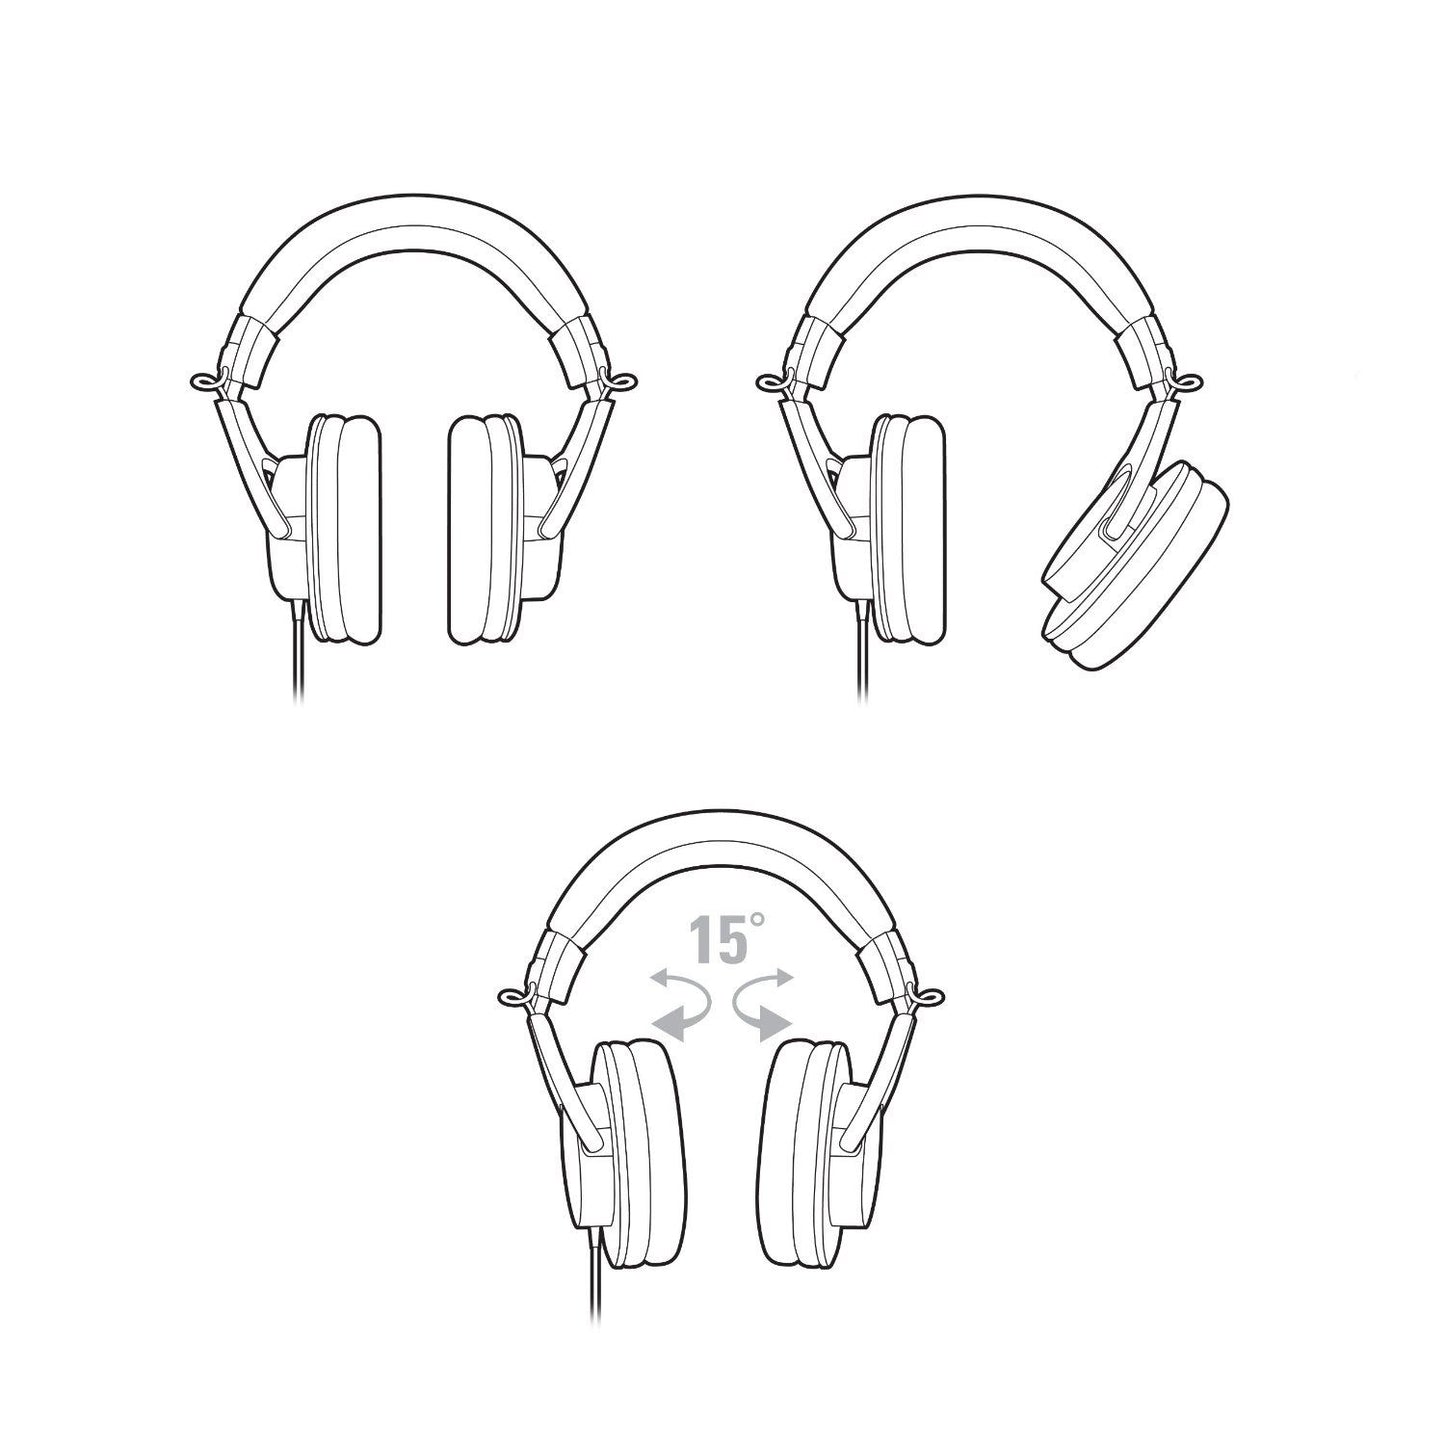 Audio Technica ATH-M20x Professional Headphones